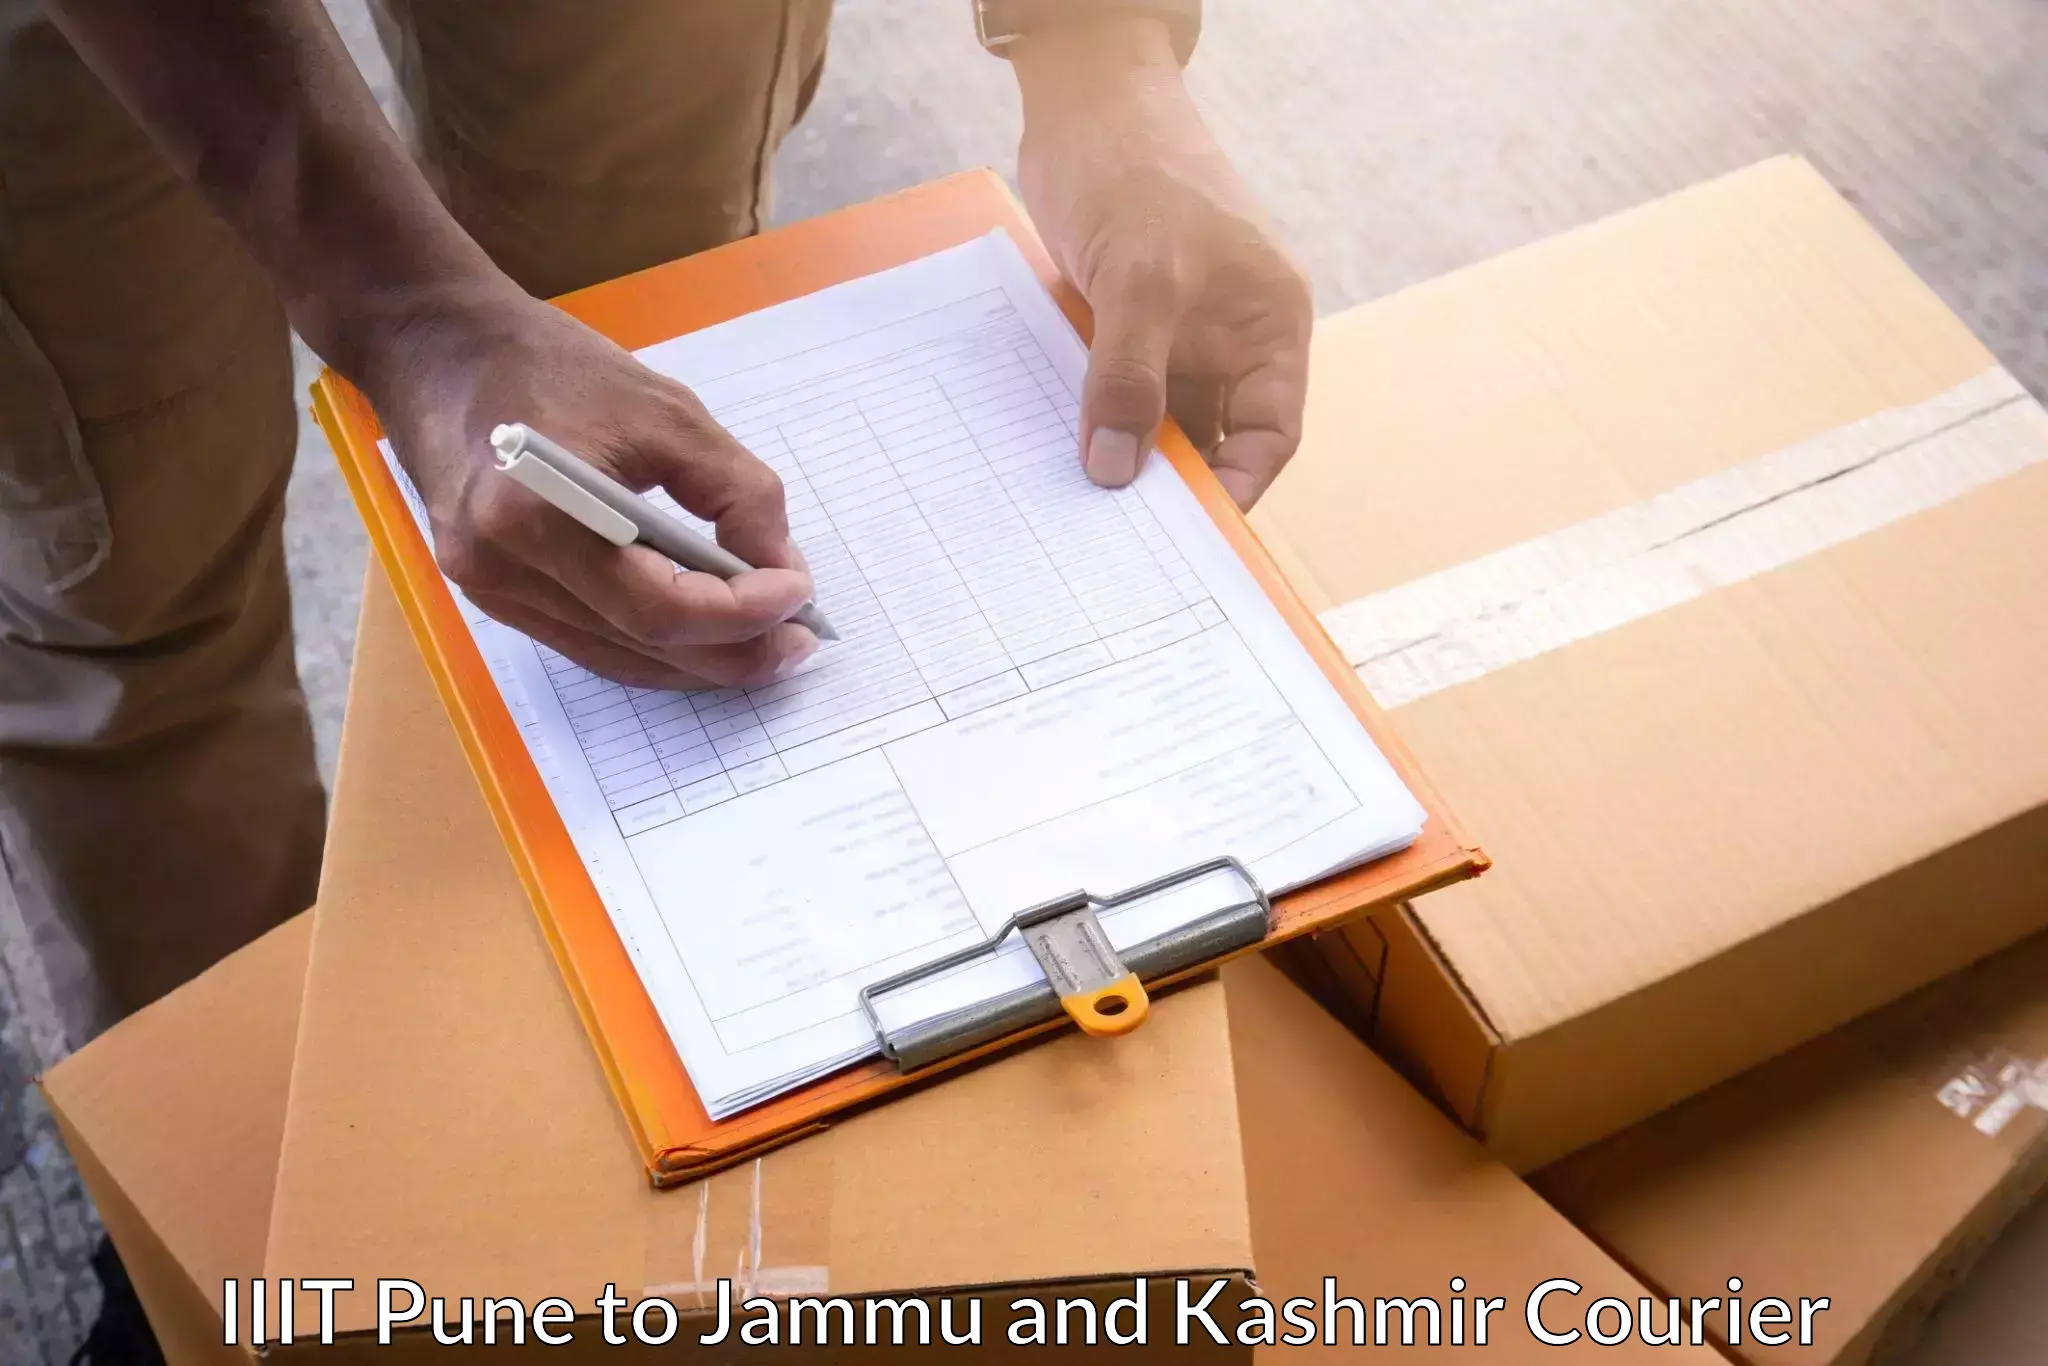 Courier service comparison IIIT Pune to Kargil